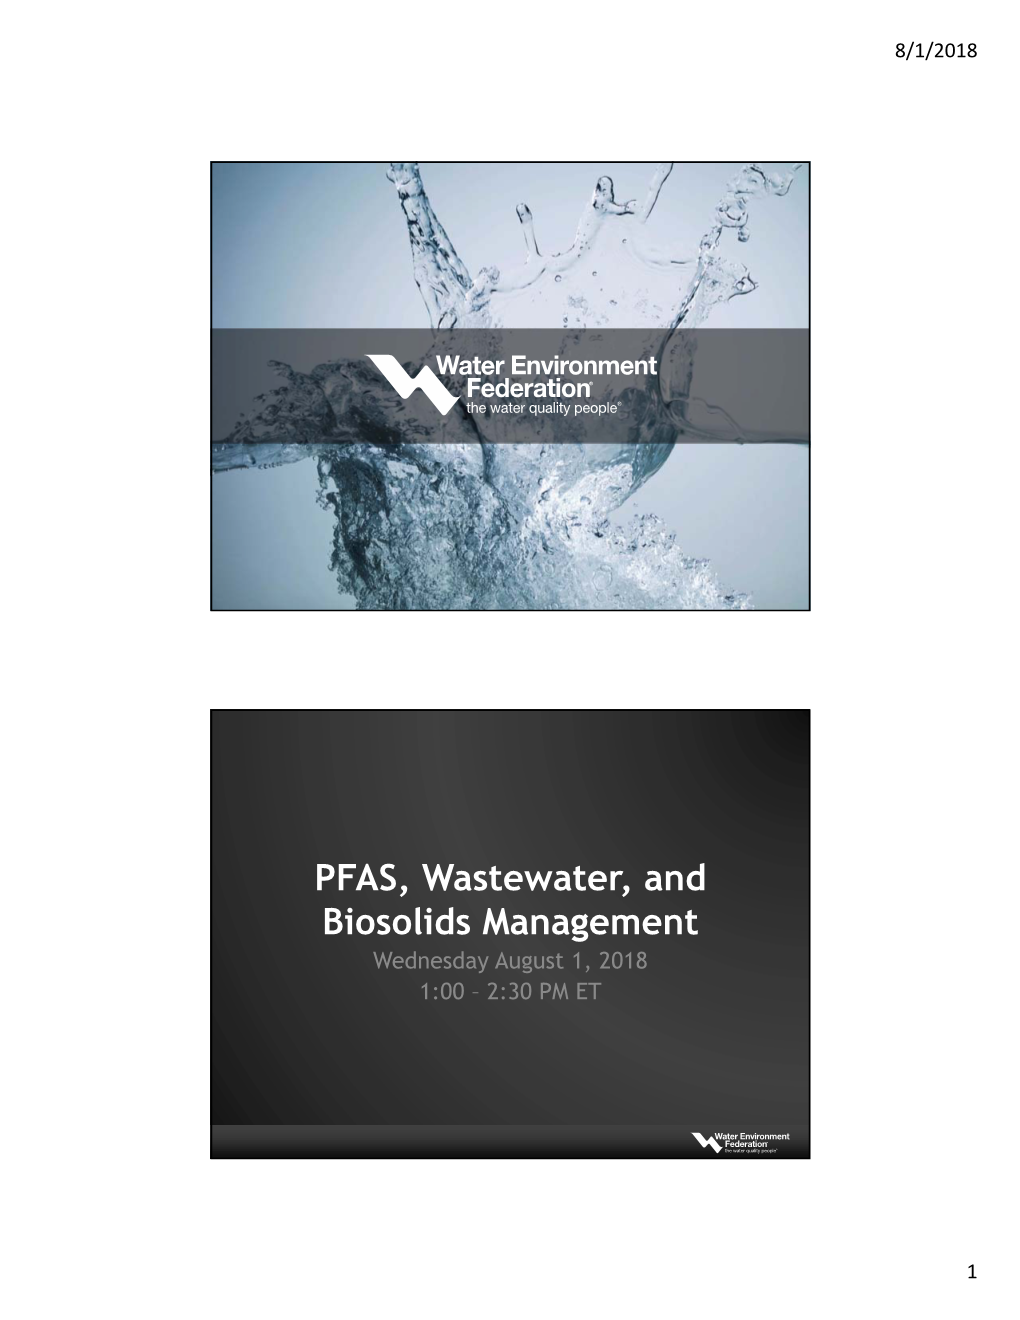 PFAS, Wastewater, and Biosolids Management Wednesday August 1, 2018 1:00 – 2:30 PM ET